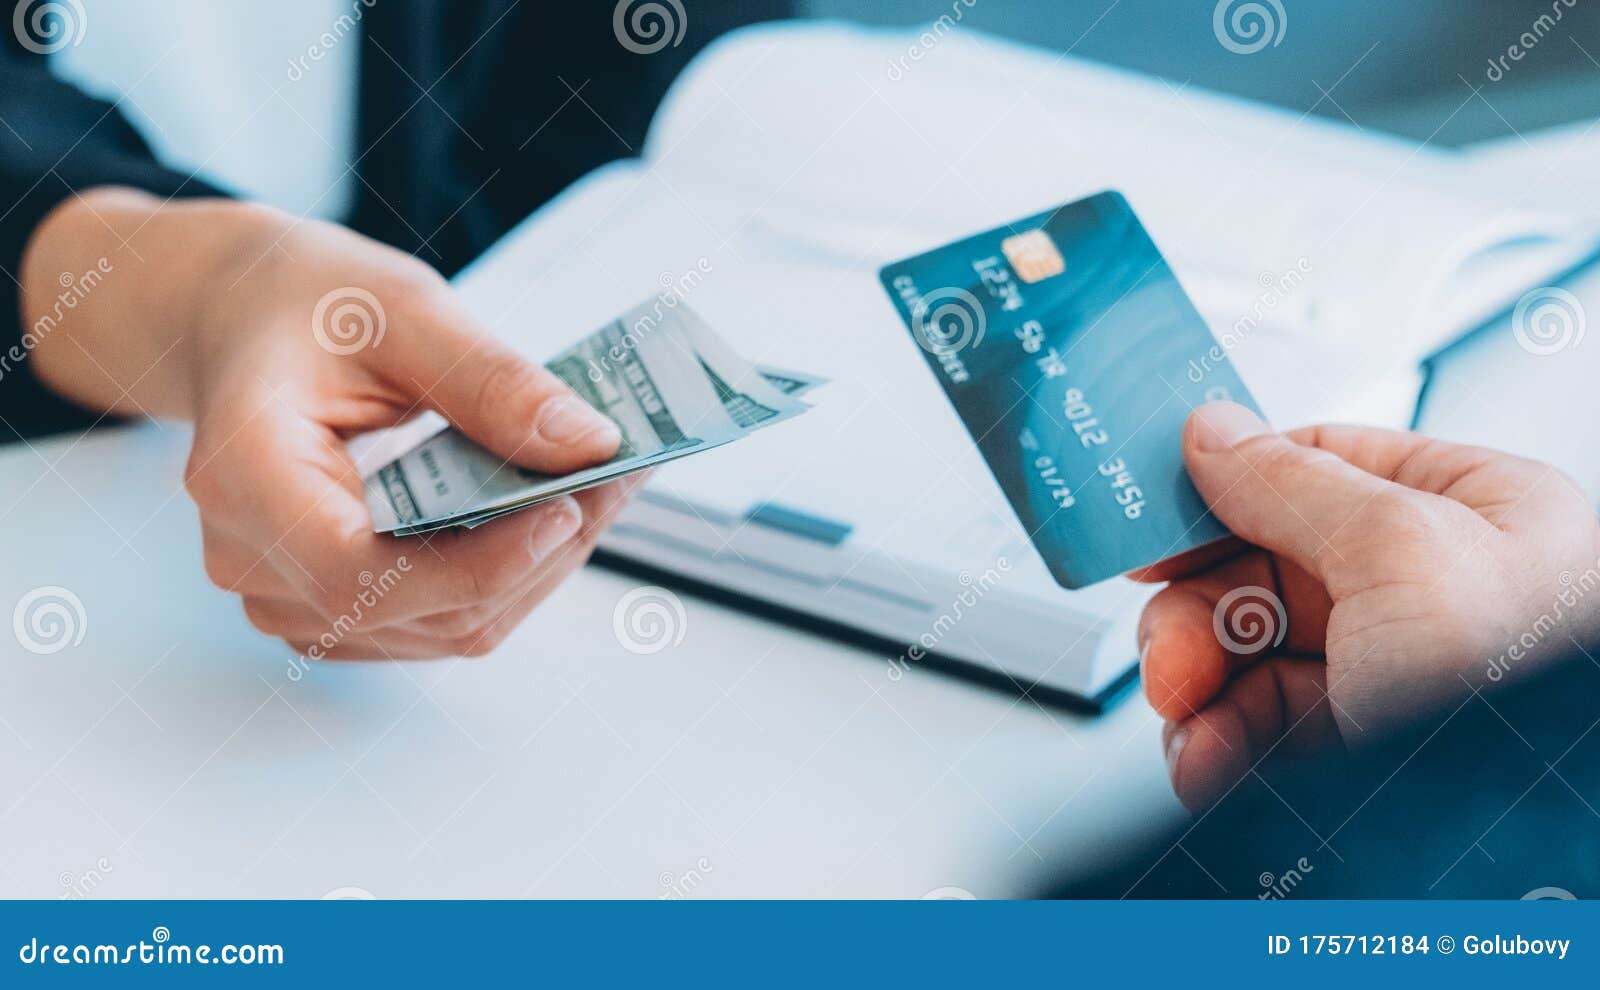 Money Transfer Man Exchanging Credit Card Cash Stock Photo - Image of desk,  exchanging: 175712184